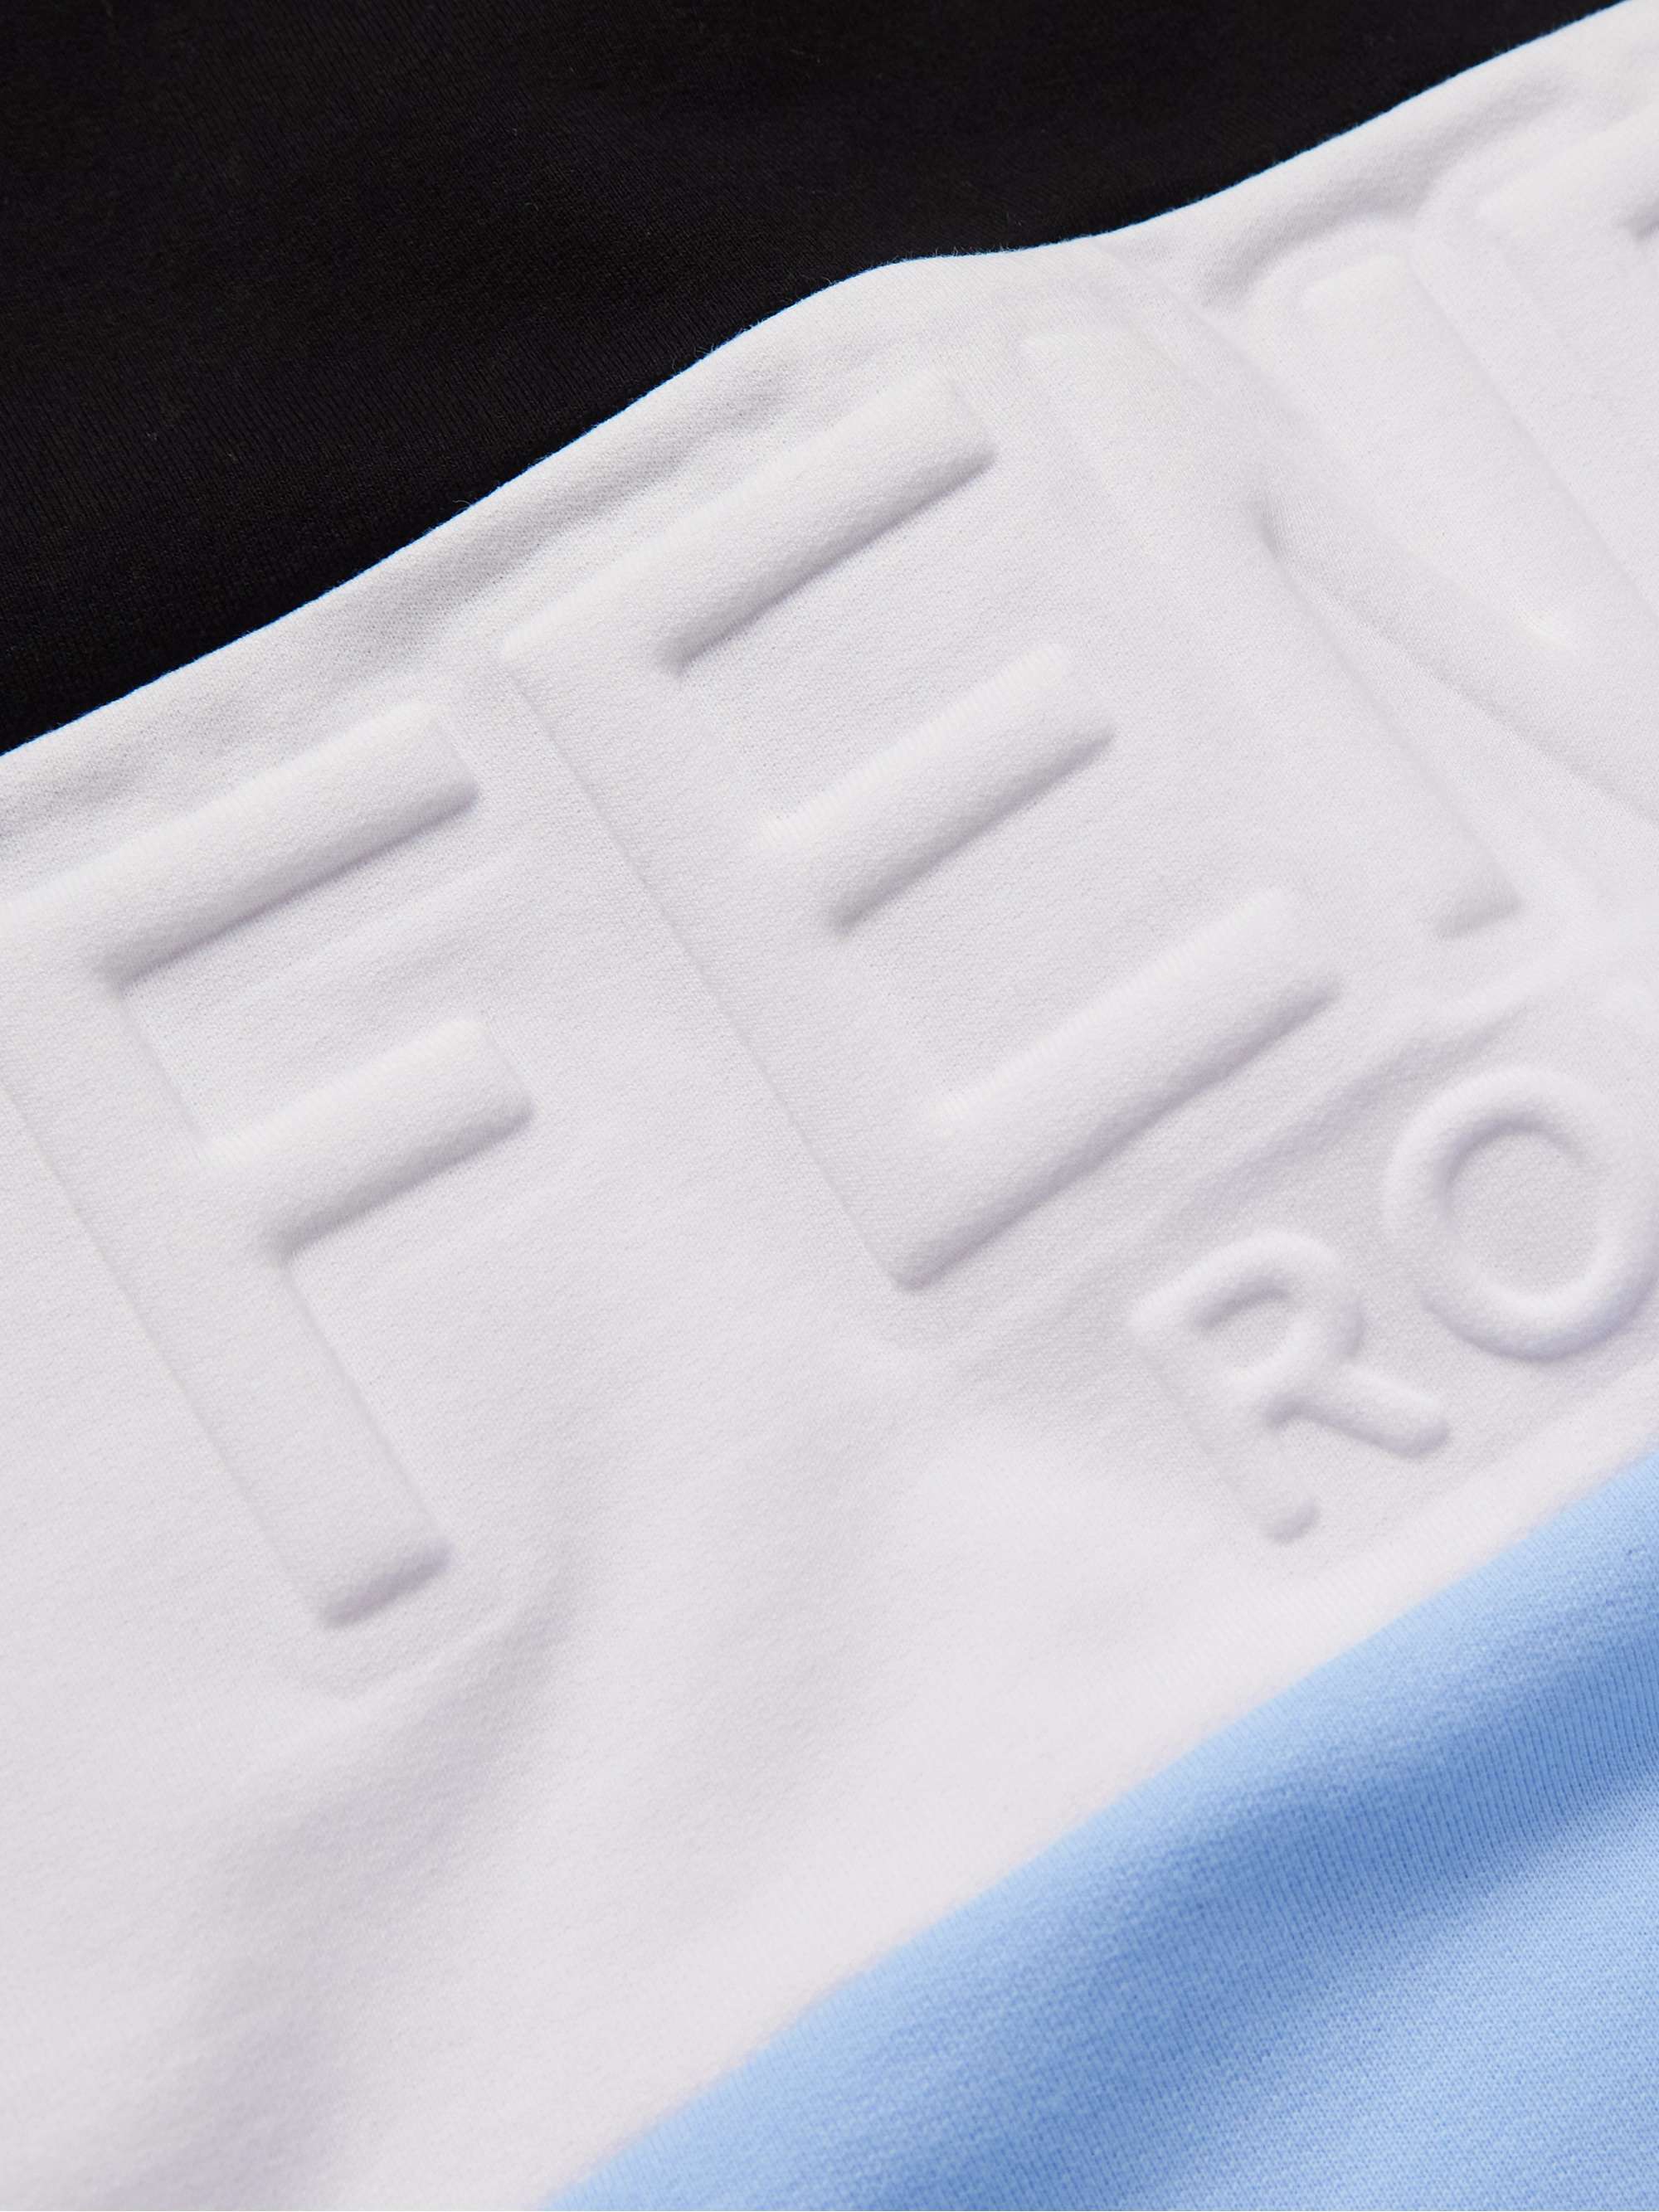 FENDI Logo-Debossed Colour-Block Cotton-Jersey T-Shirt